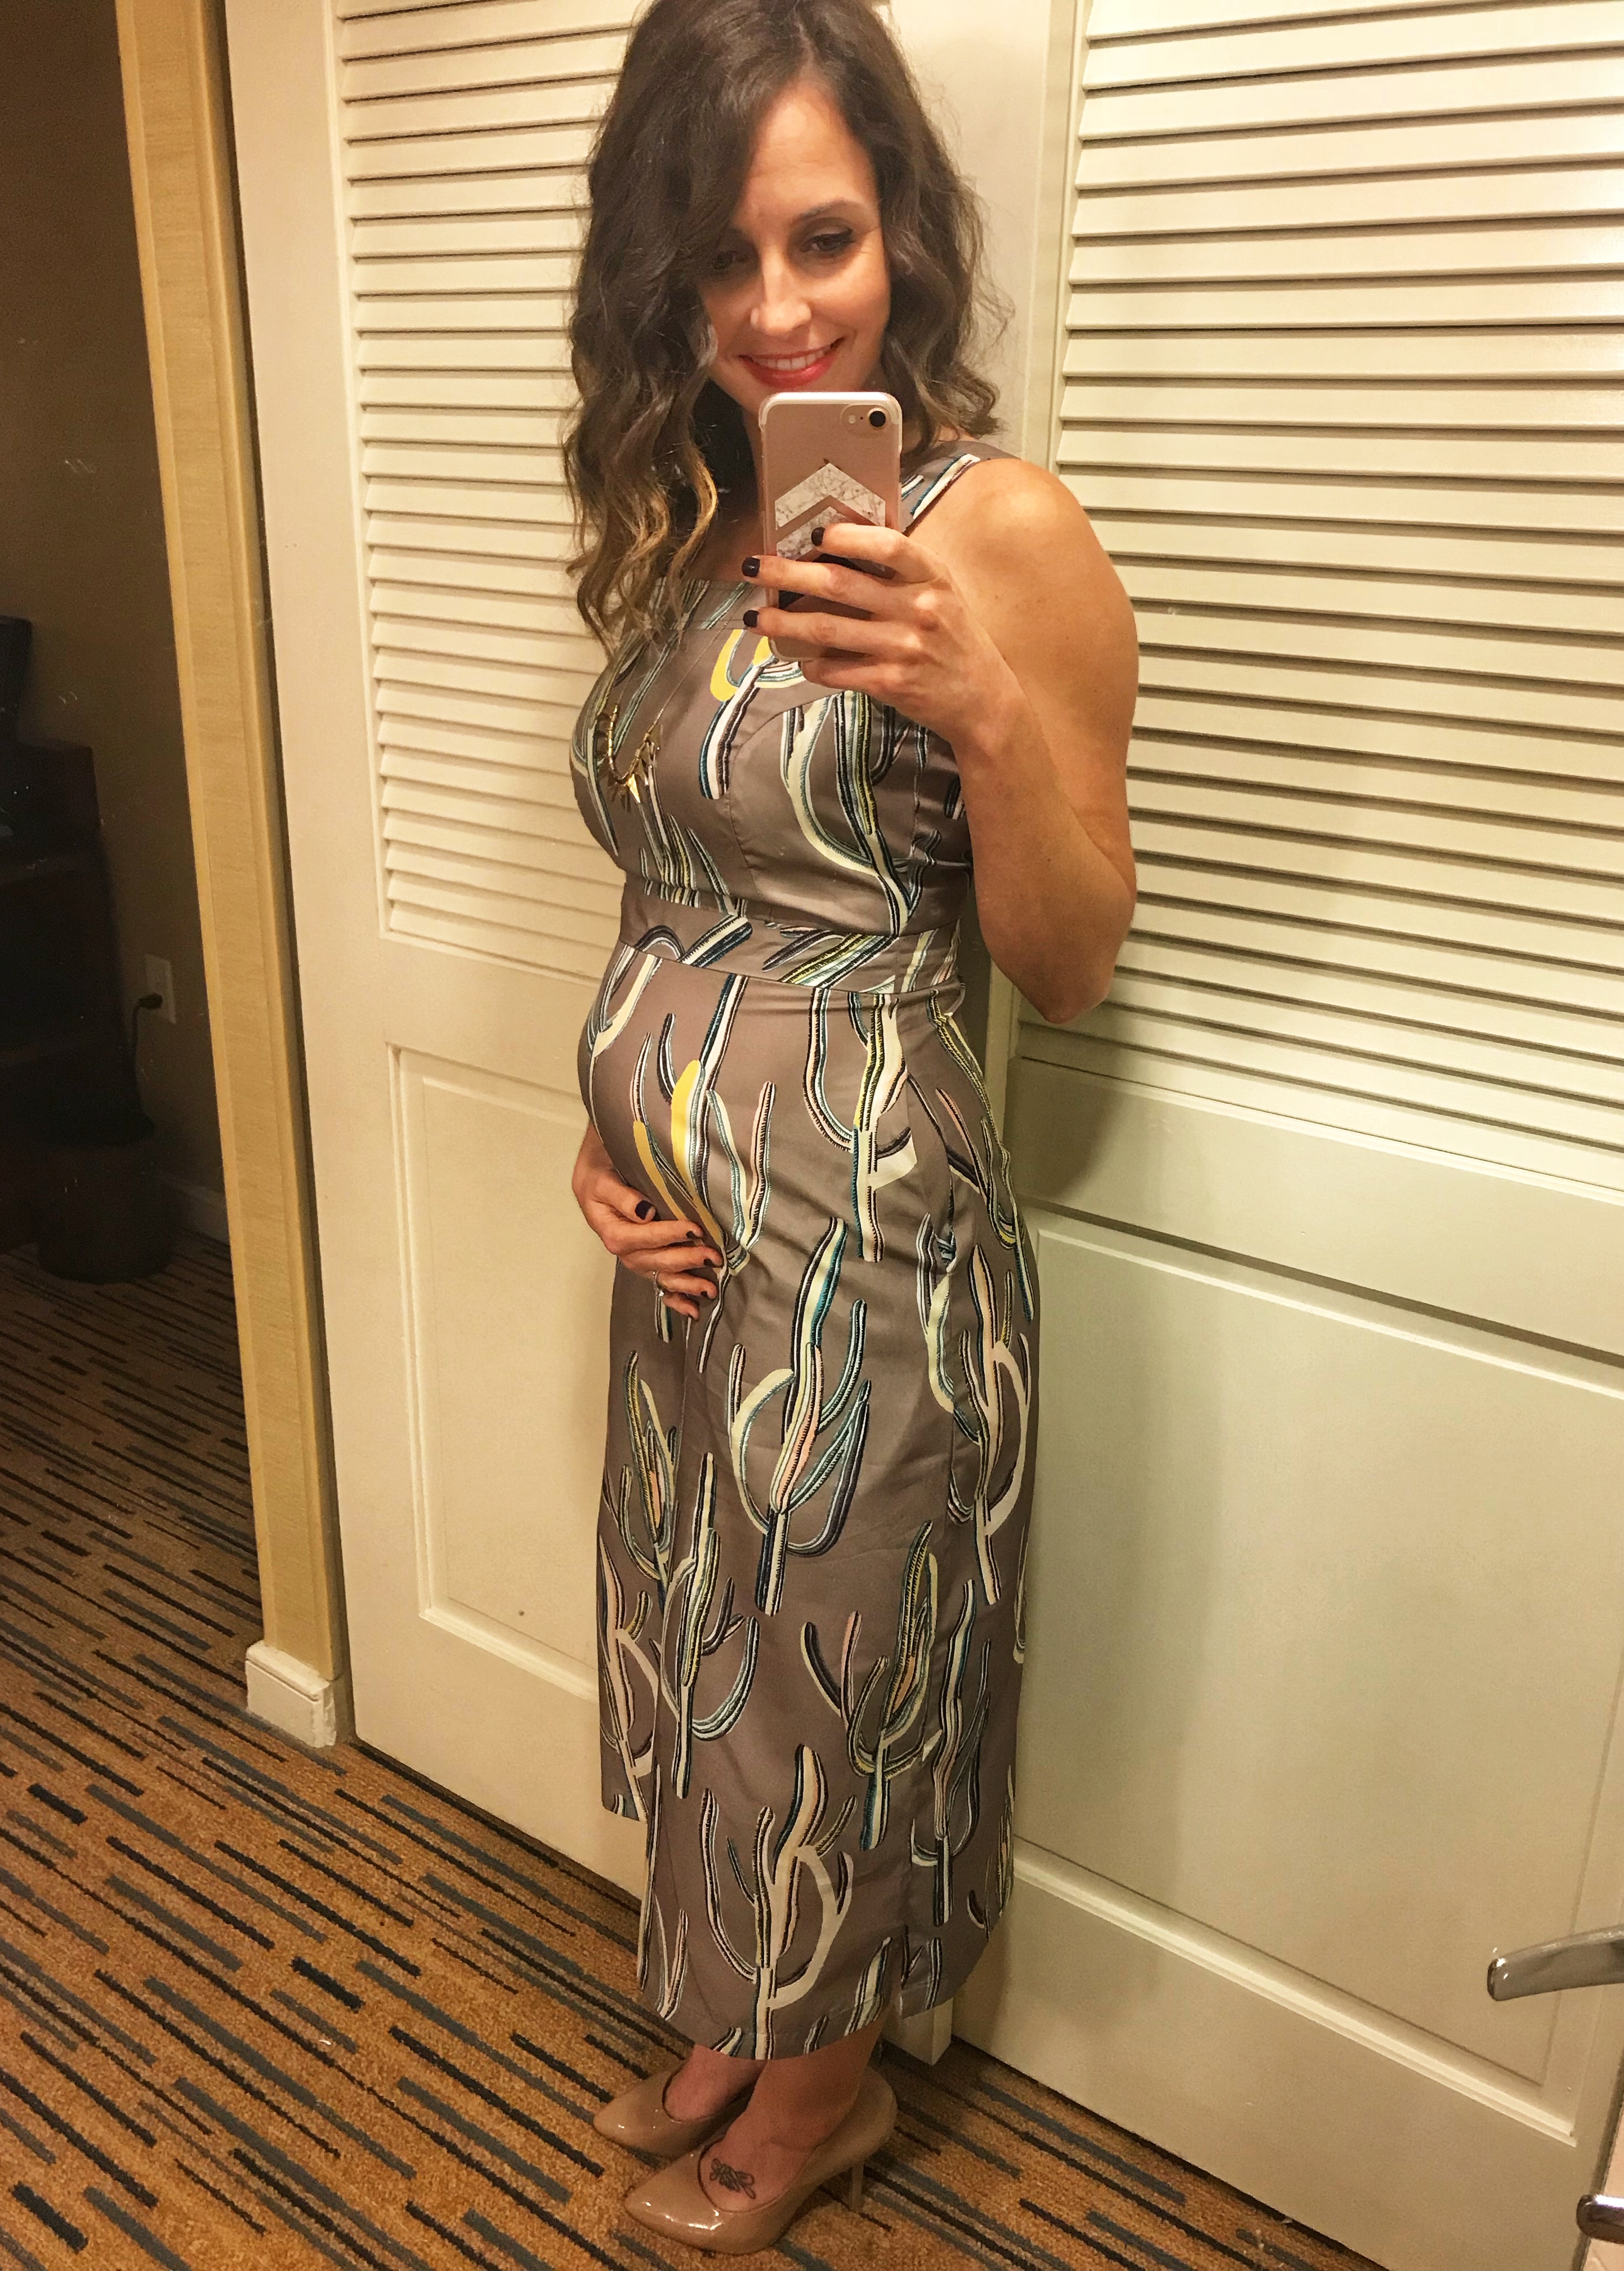 Heather 17 weeks pregnant